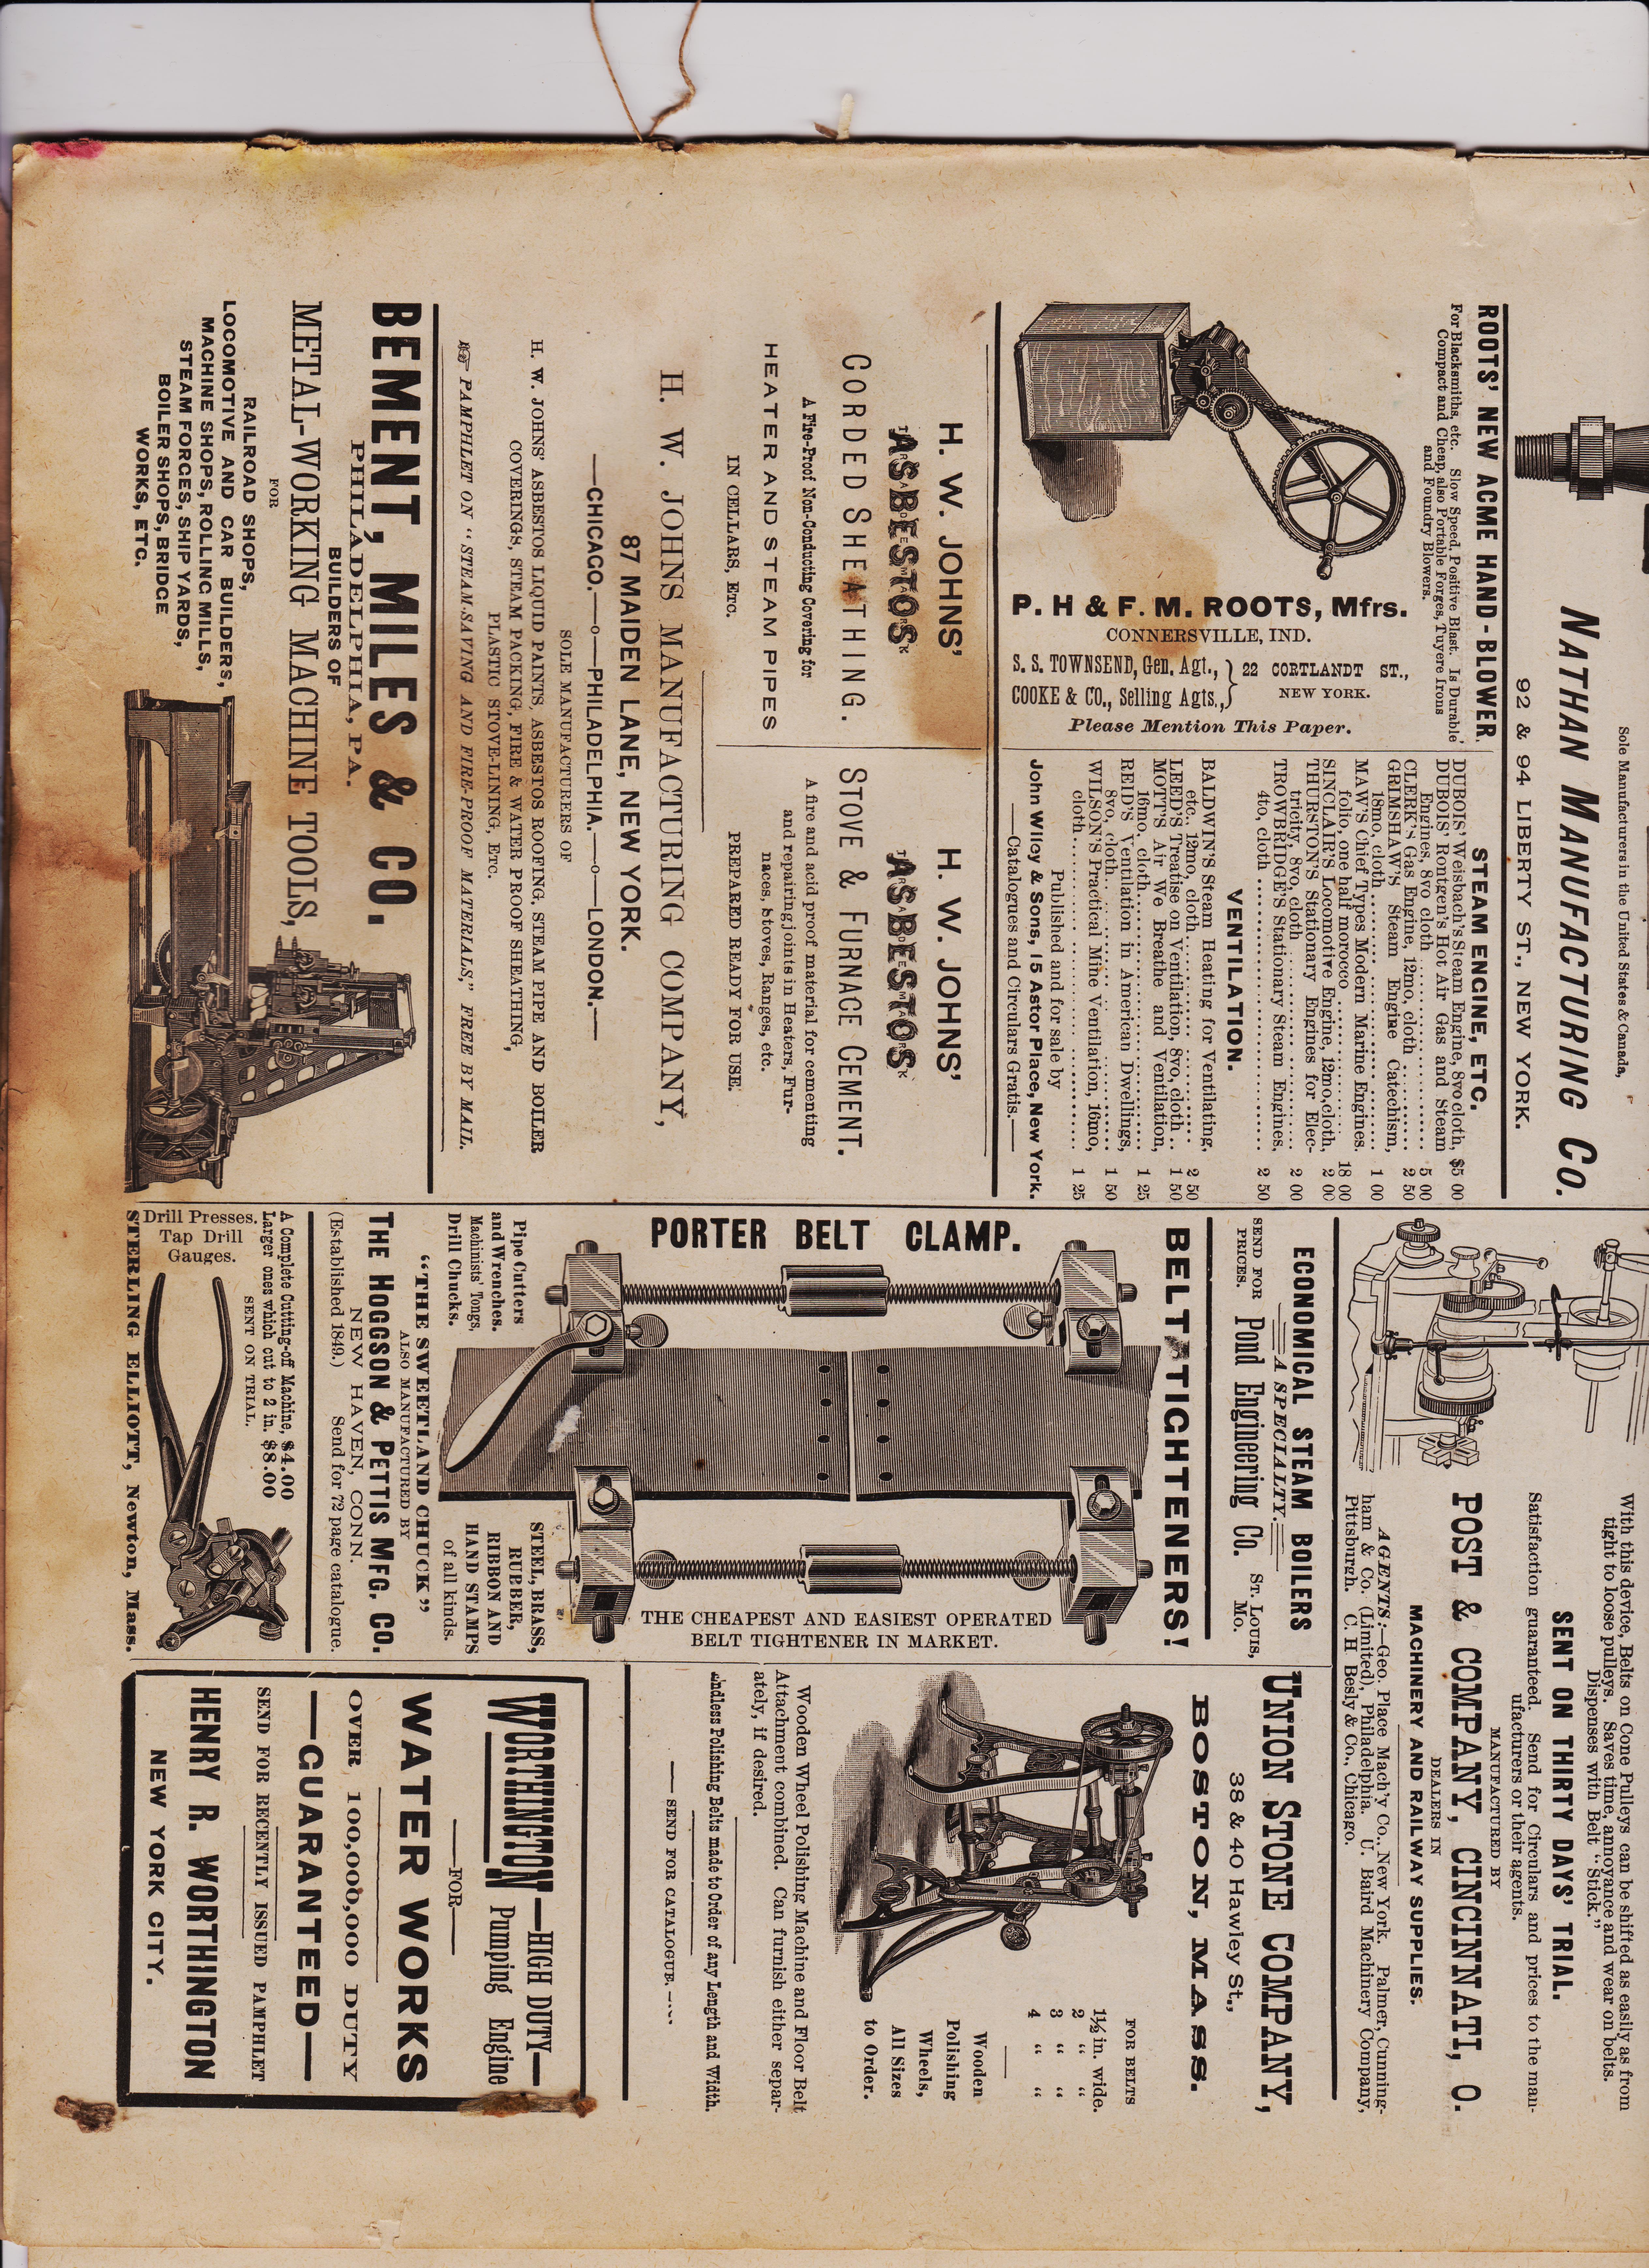 https://antiquemachinery.com/images-American-Machinist-Jan-1-1887/American-Machinist-Jan-1-1887-pg-11-bot-Union-Stone-Co-Worthington-Water-Punp-Bement-Miles-and-Co-Metal-Planer-Asbestos-Sheathing-Cement-H-W-Johns-Roots-Hand-BlowePorter-Belt-Clanp.jpeg